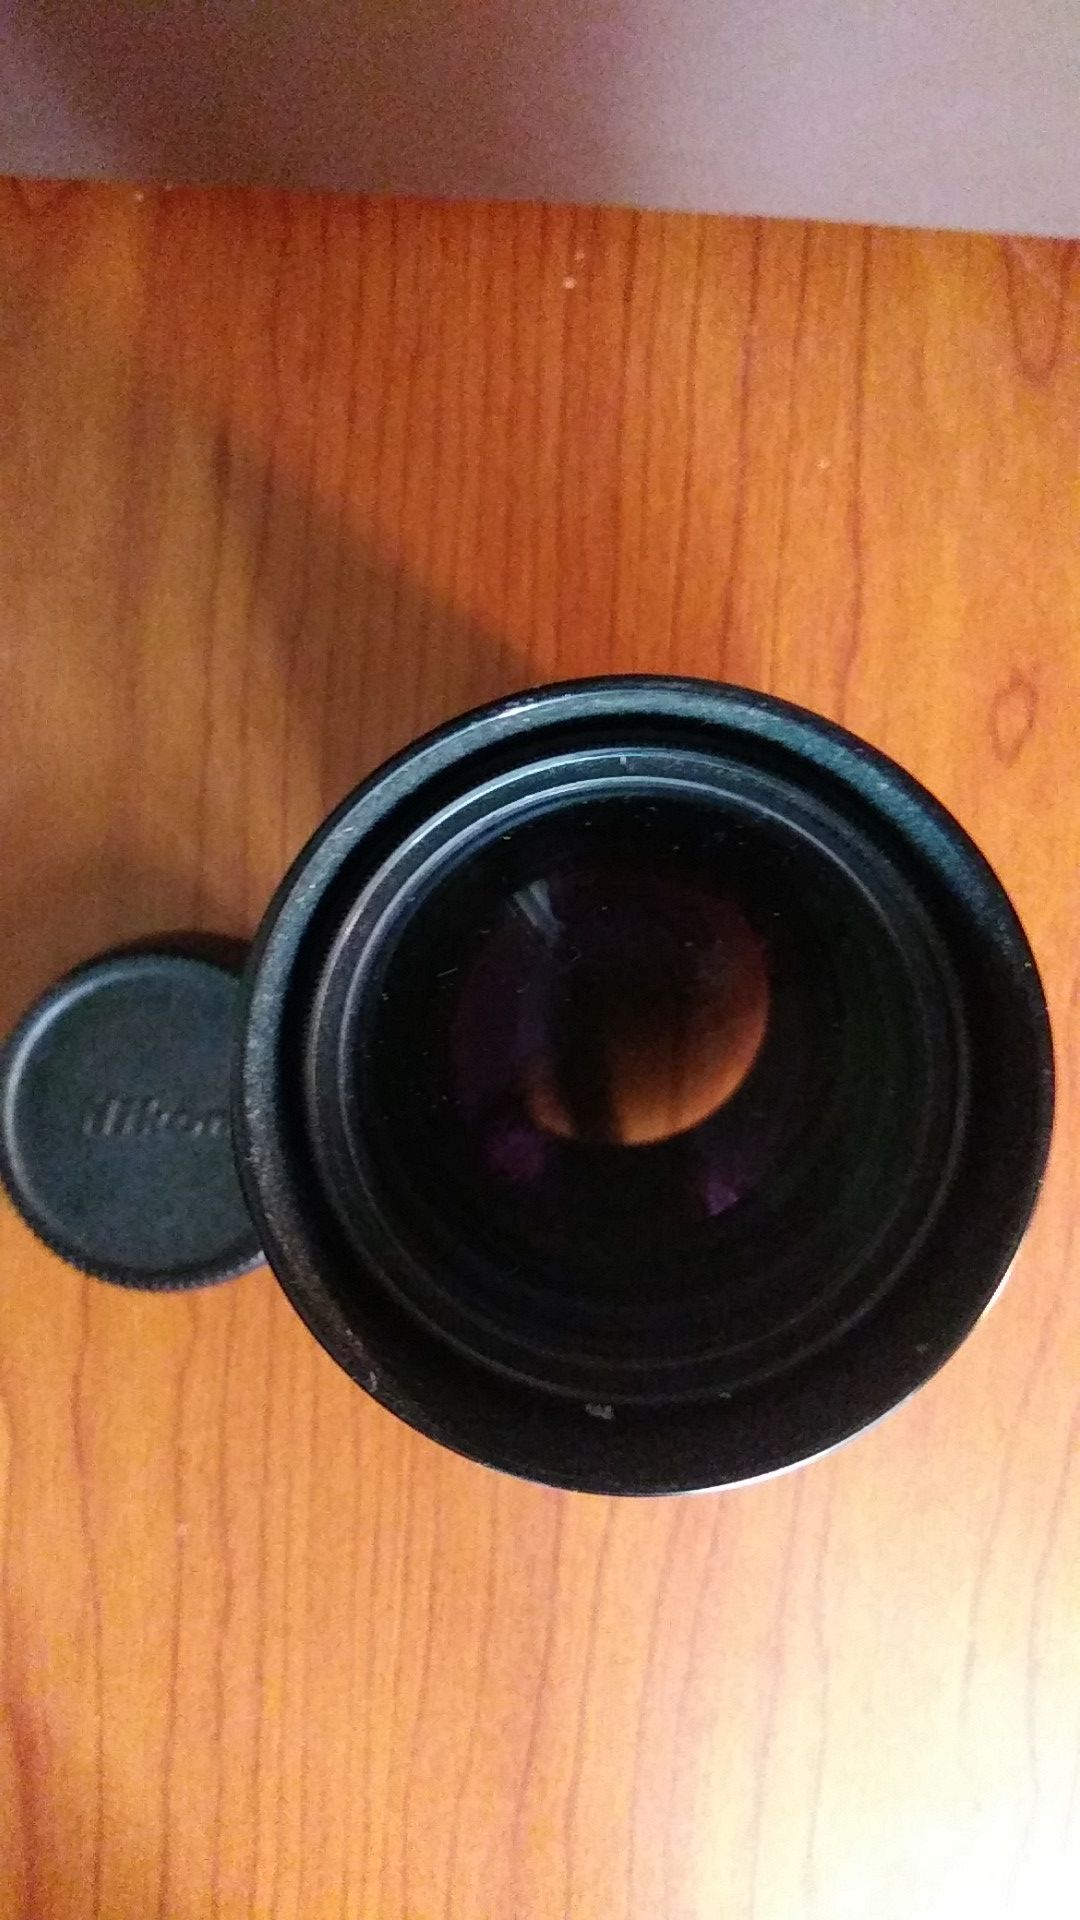 Nikon 135mm lens